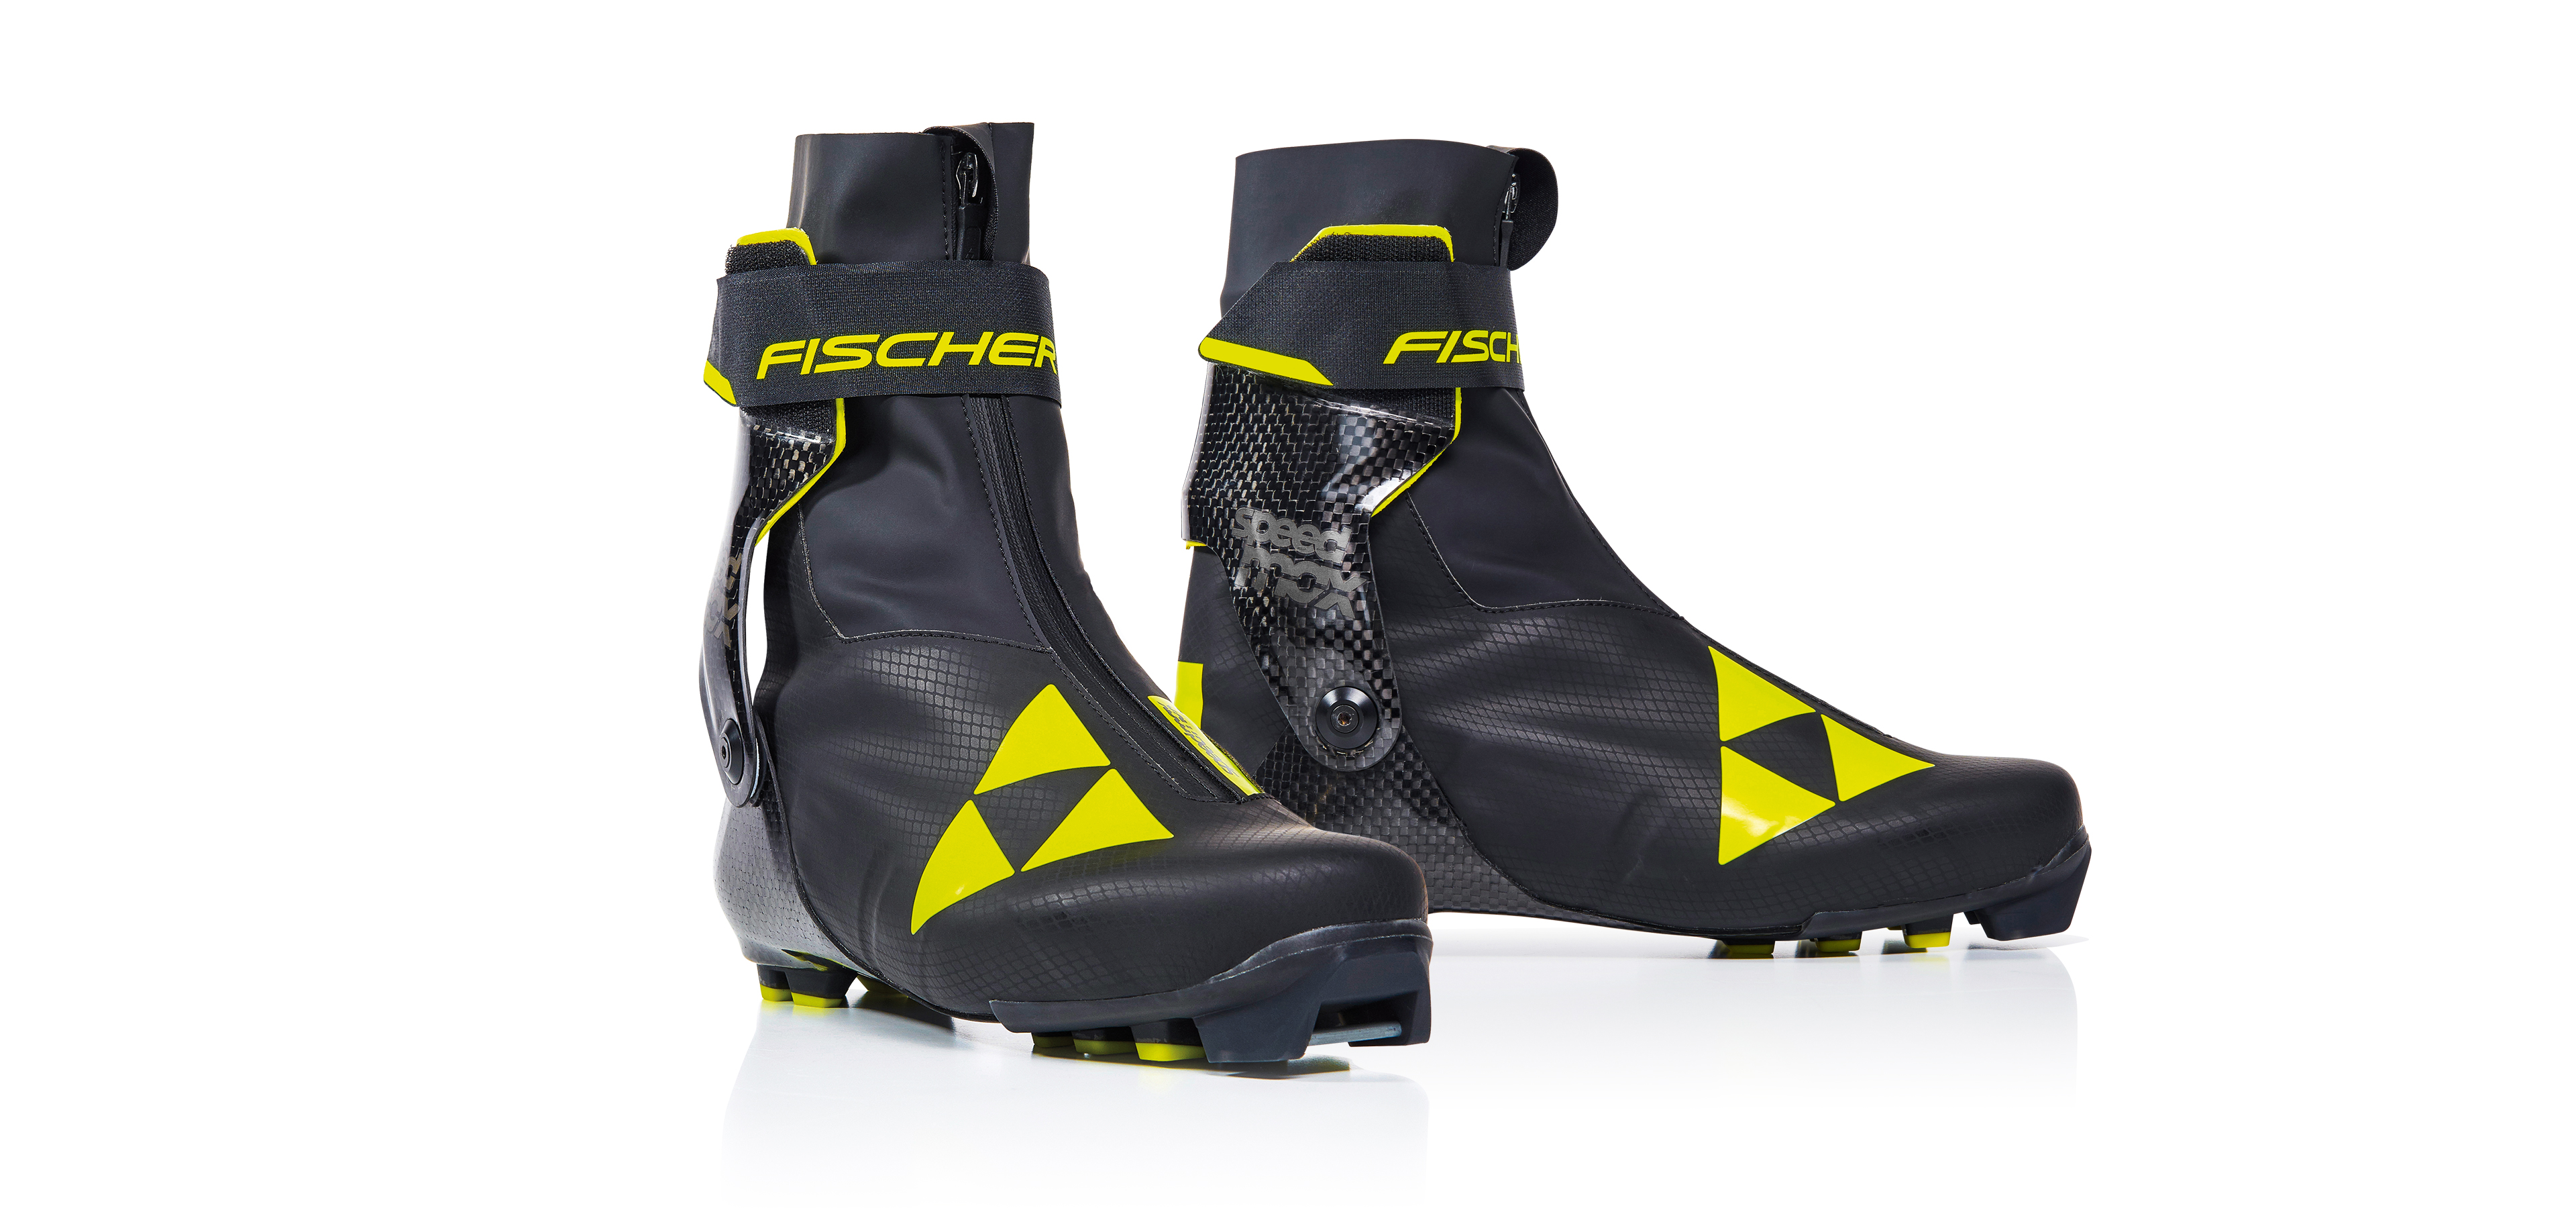 speedmax boots - Fischer Sports